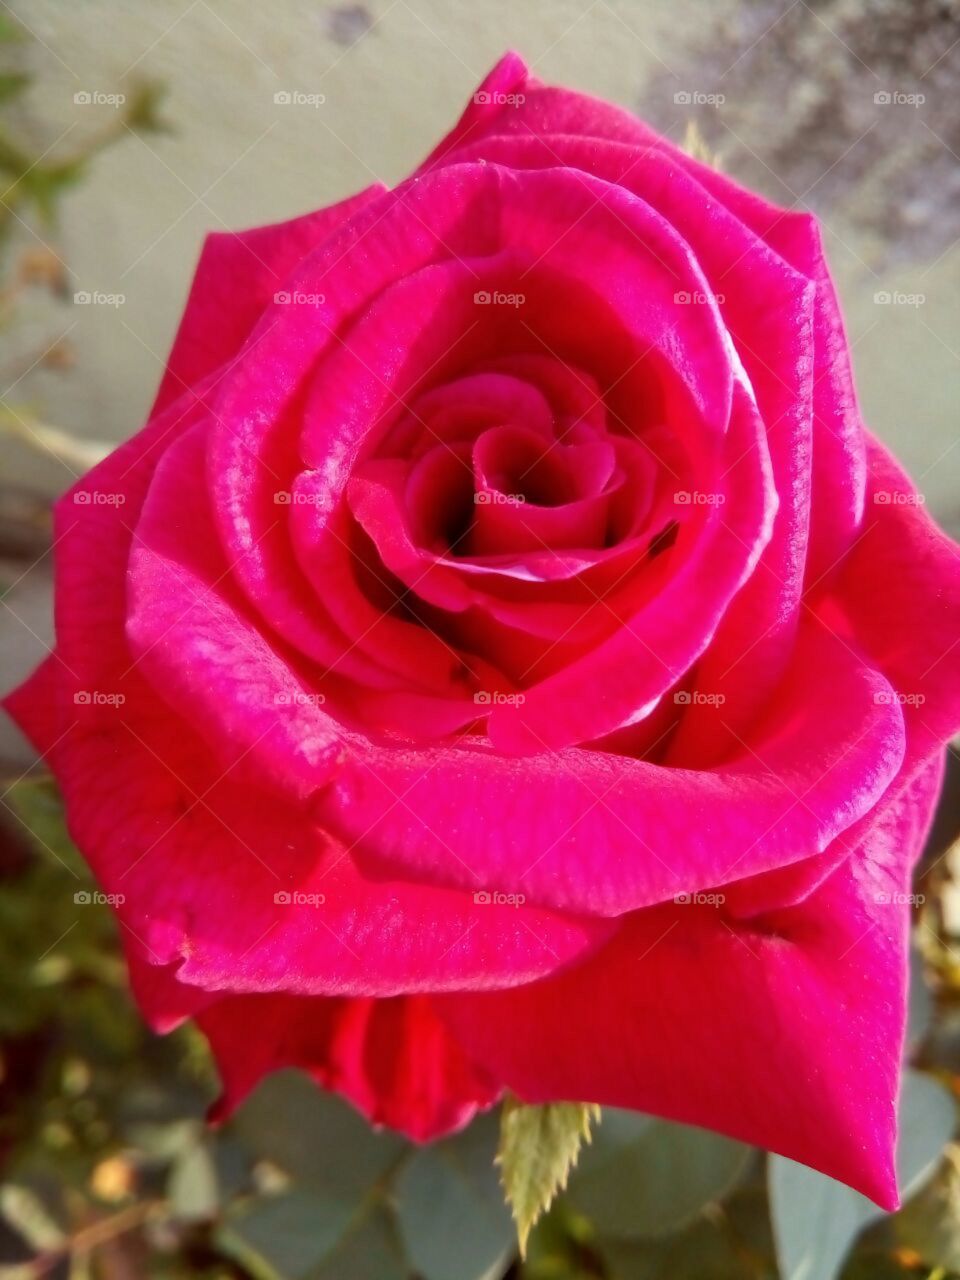 Rose is the simbol of love